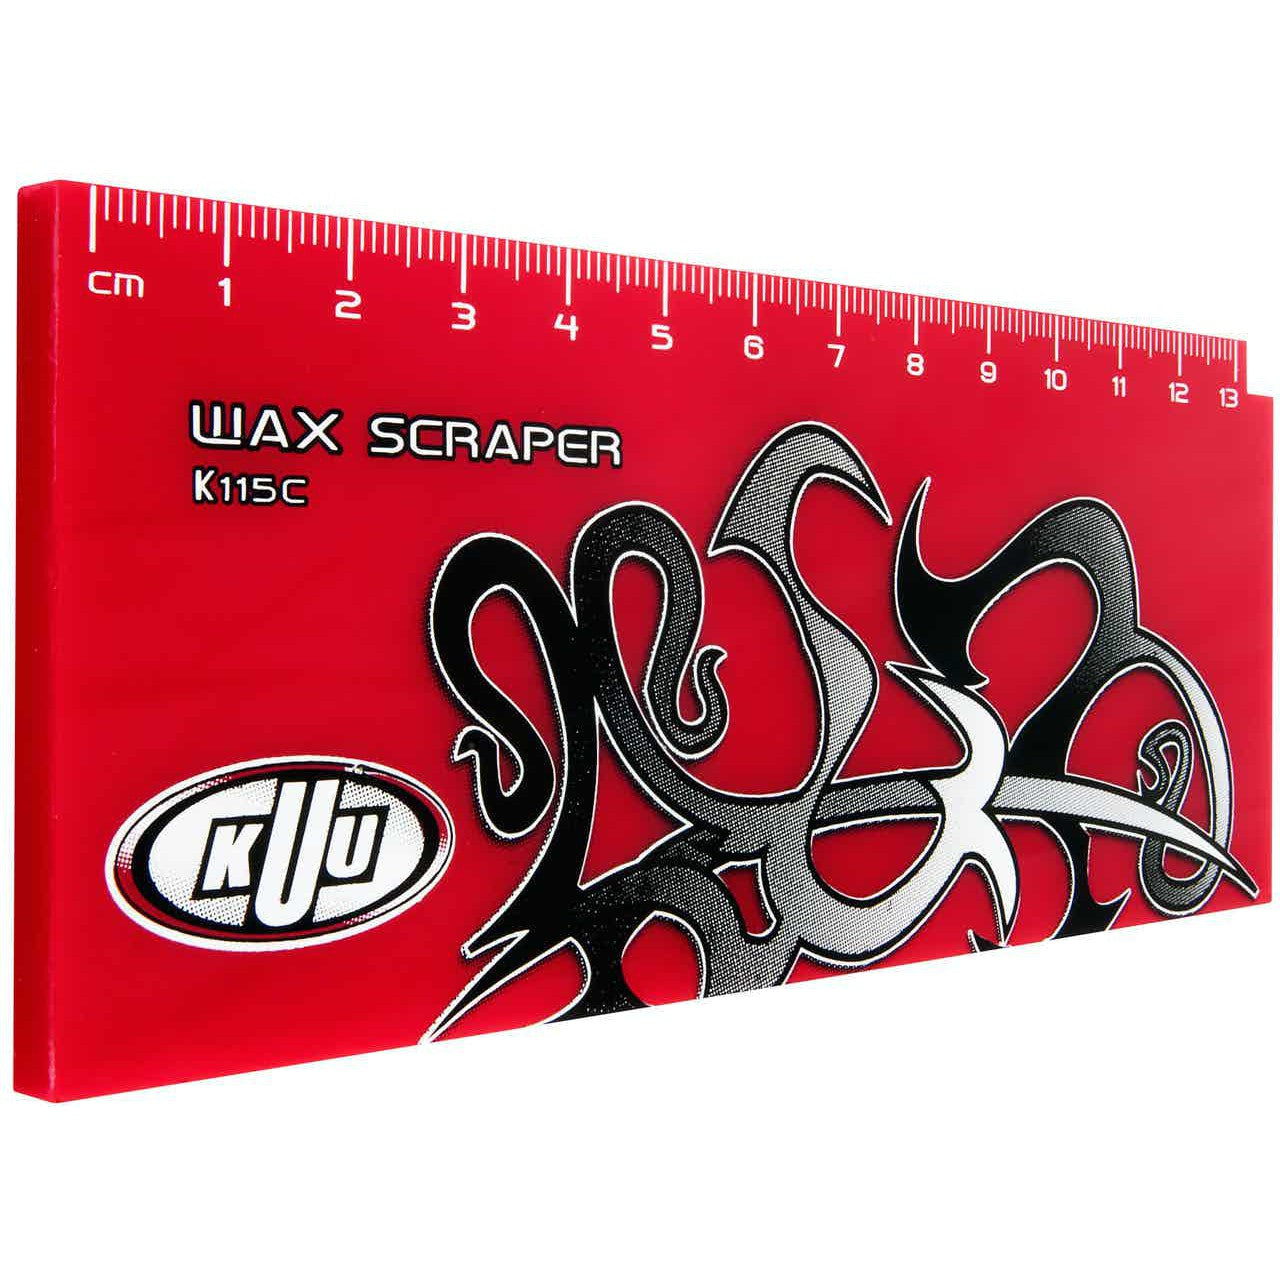 KUu Pro Plexi Scraper 1/4"